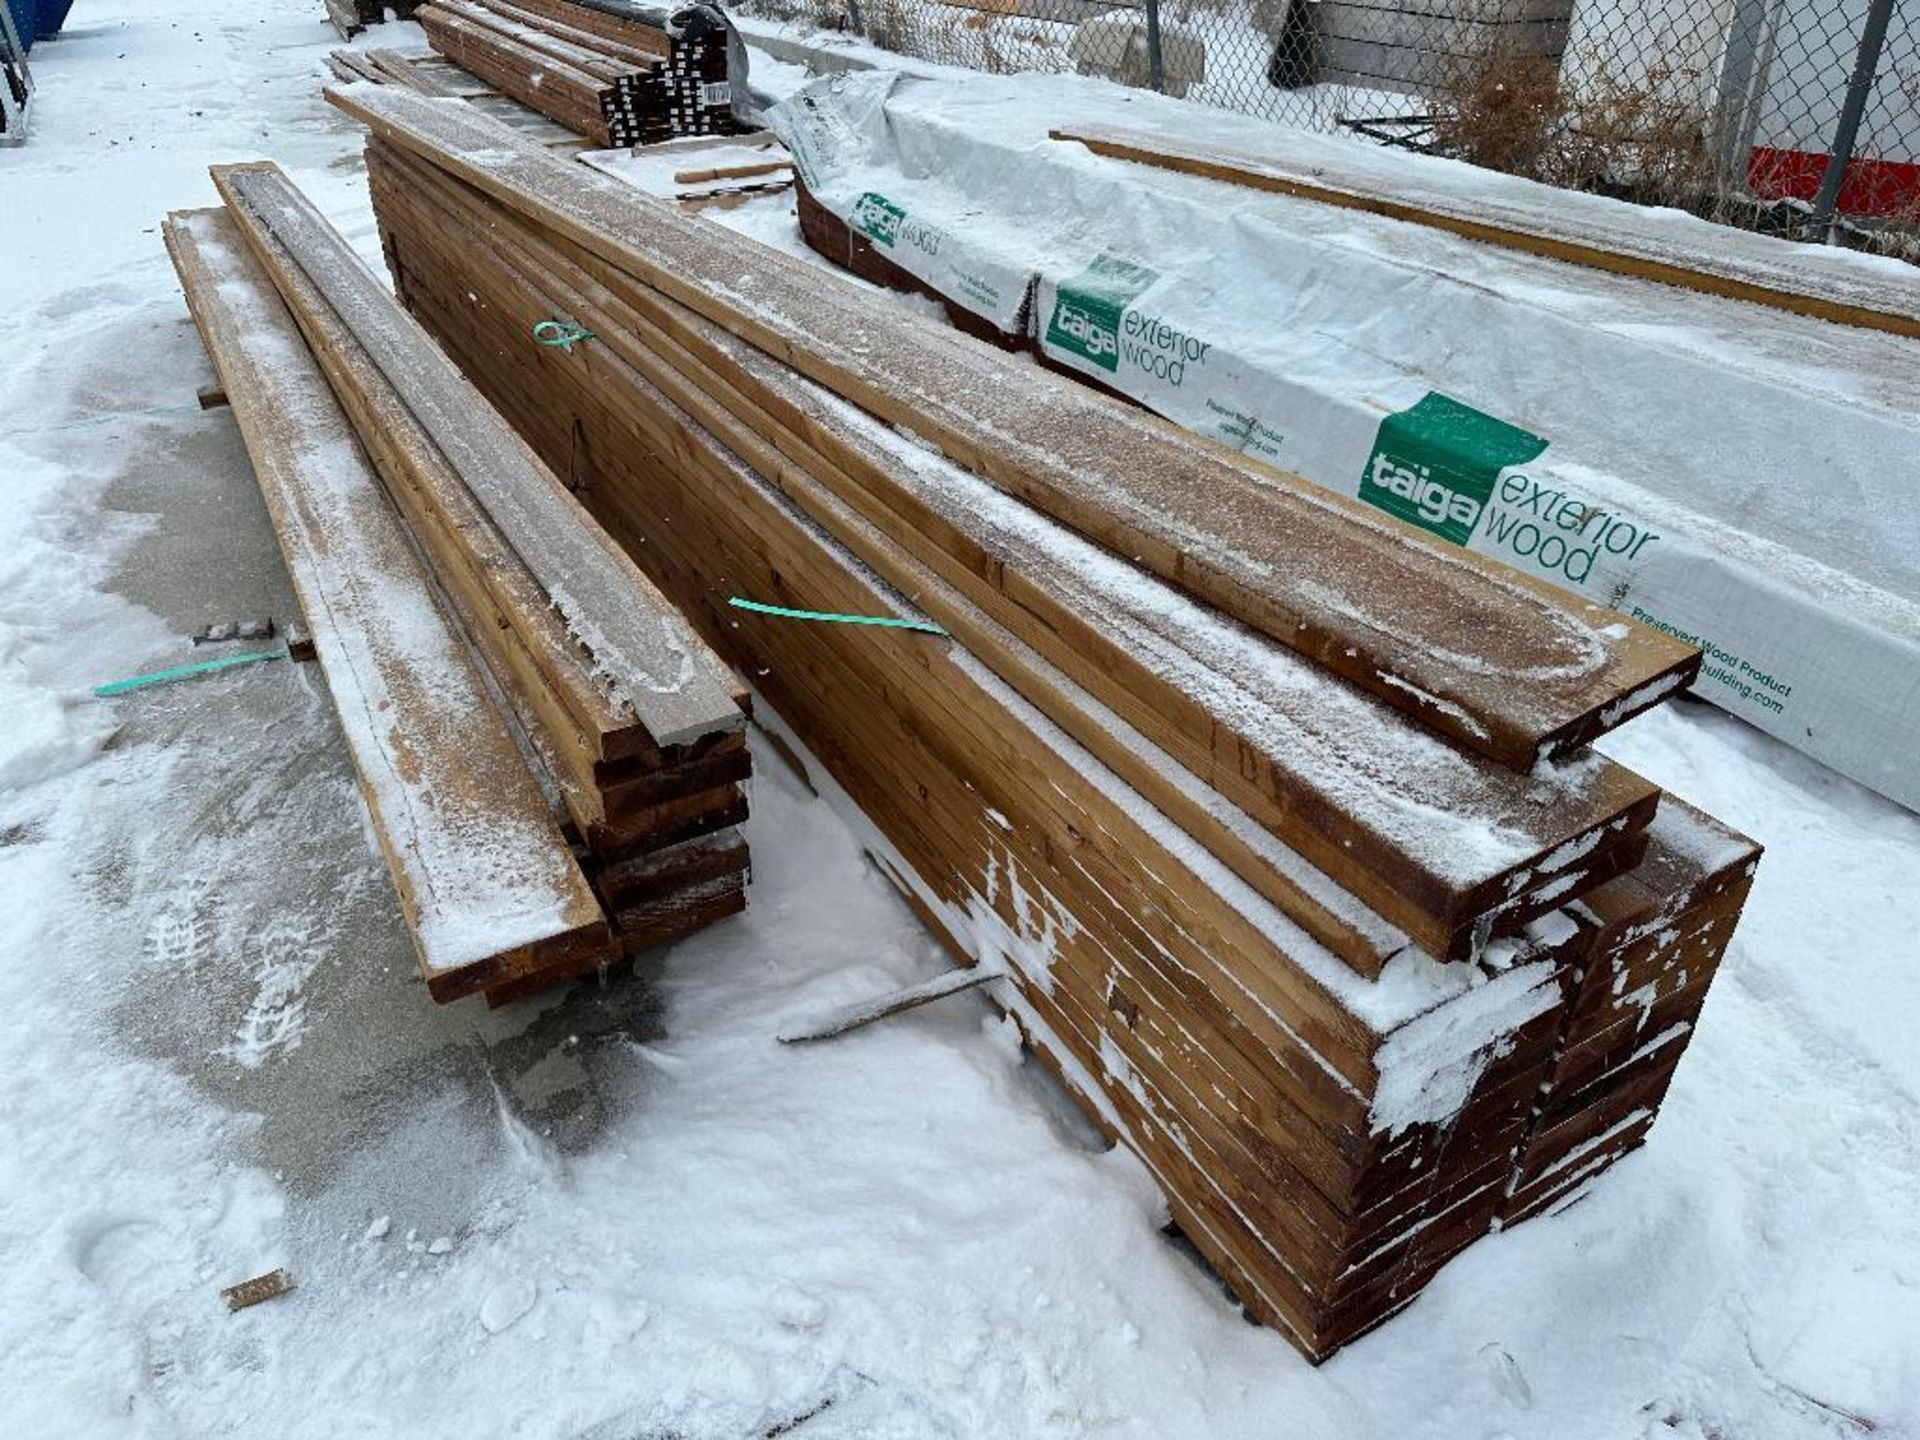 Lot of Asst. Lumber including (28) Asst. 2X10's and (18) 150" 2X8's